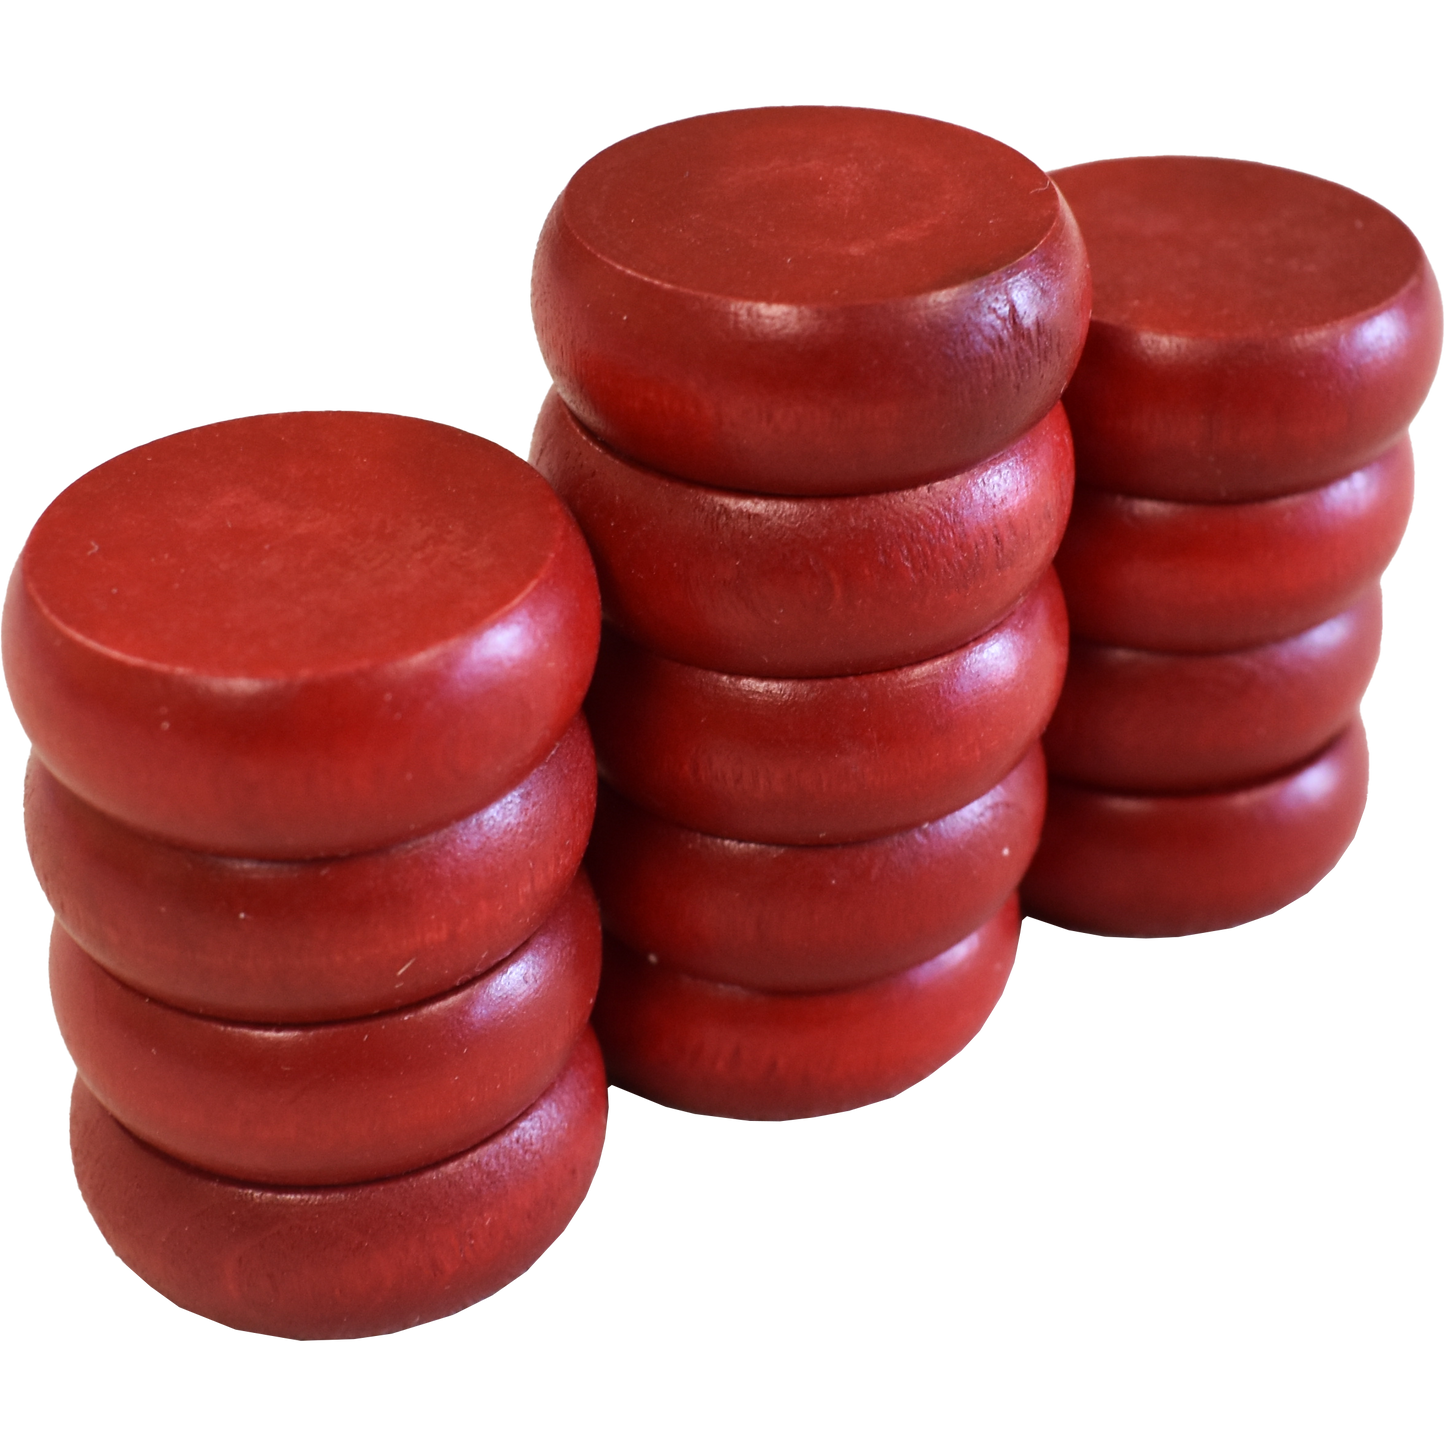 13 Mini Red Crokinole Discs - Half Set (Shiny Finish)